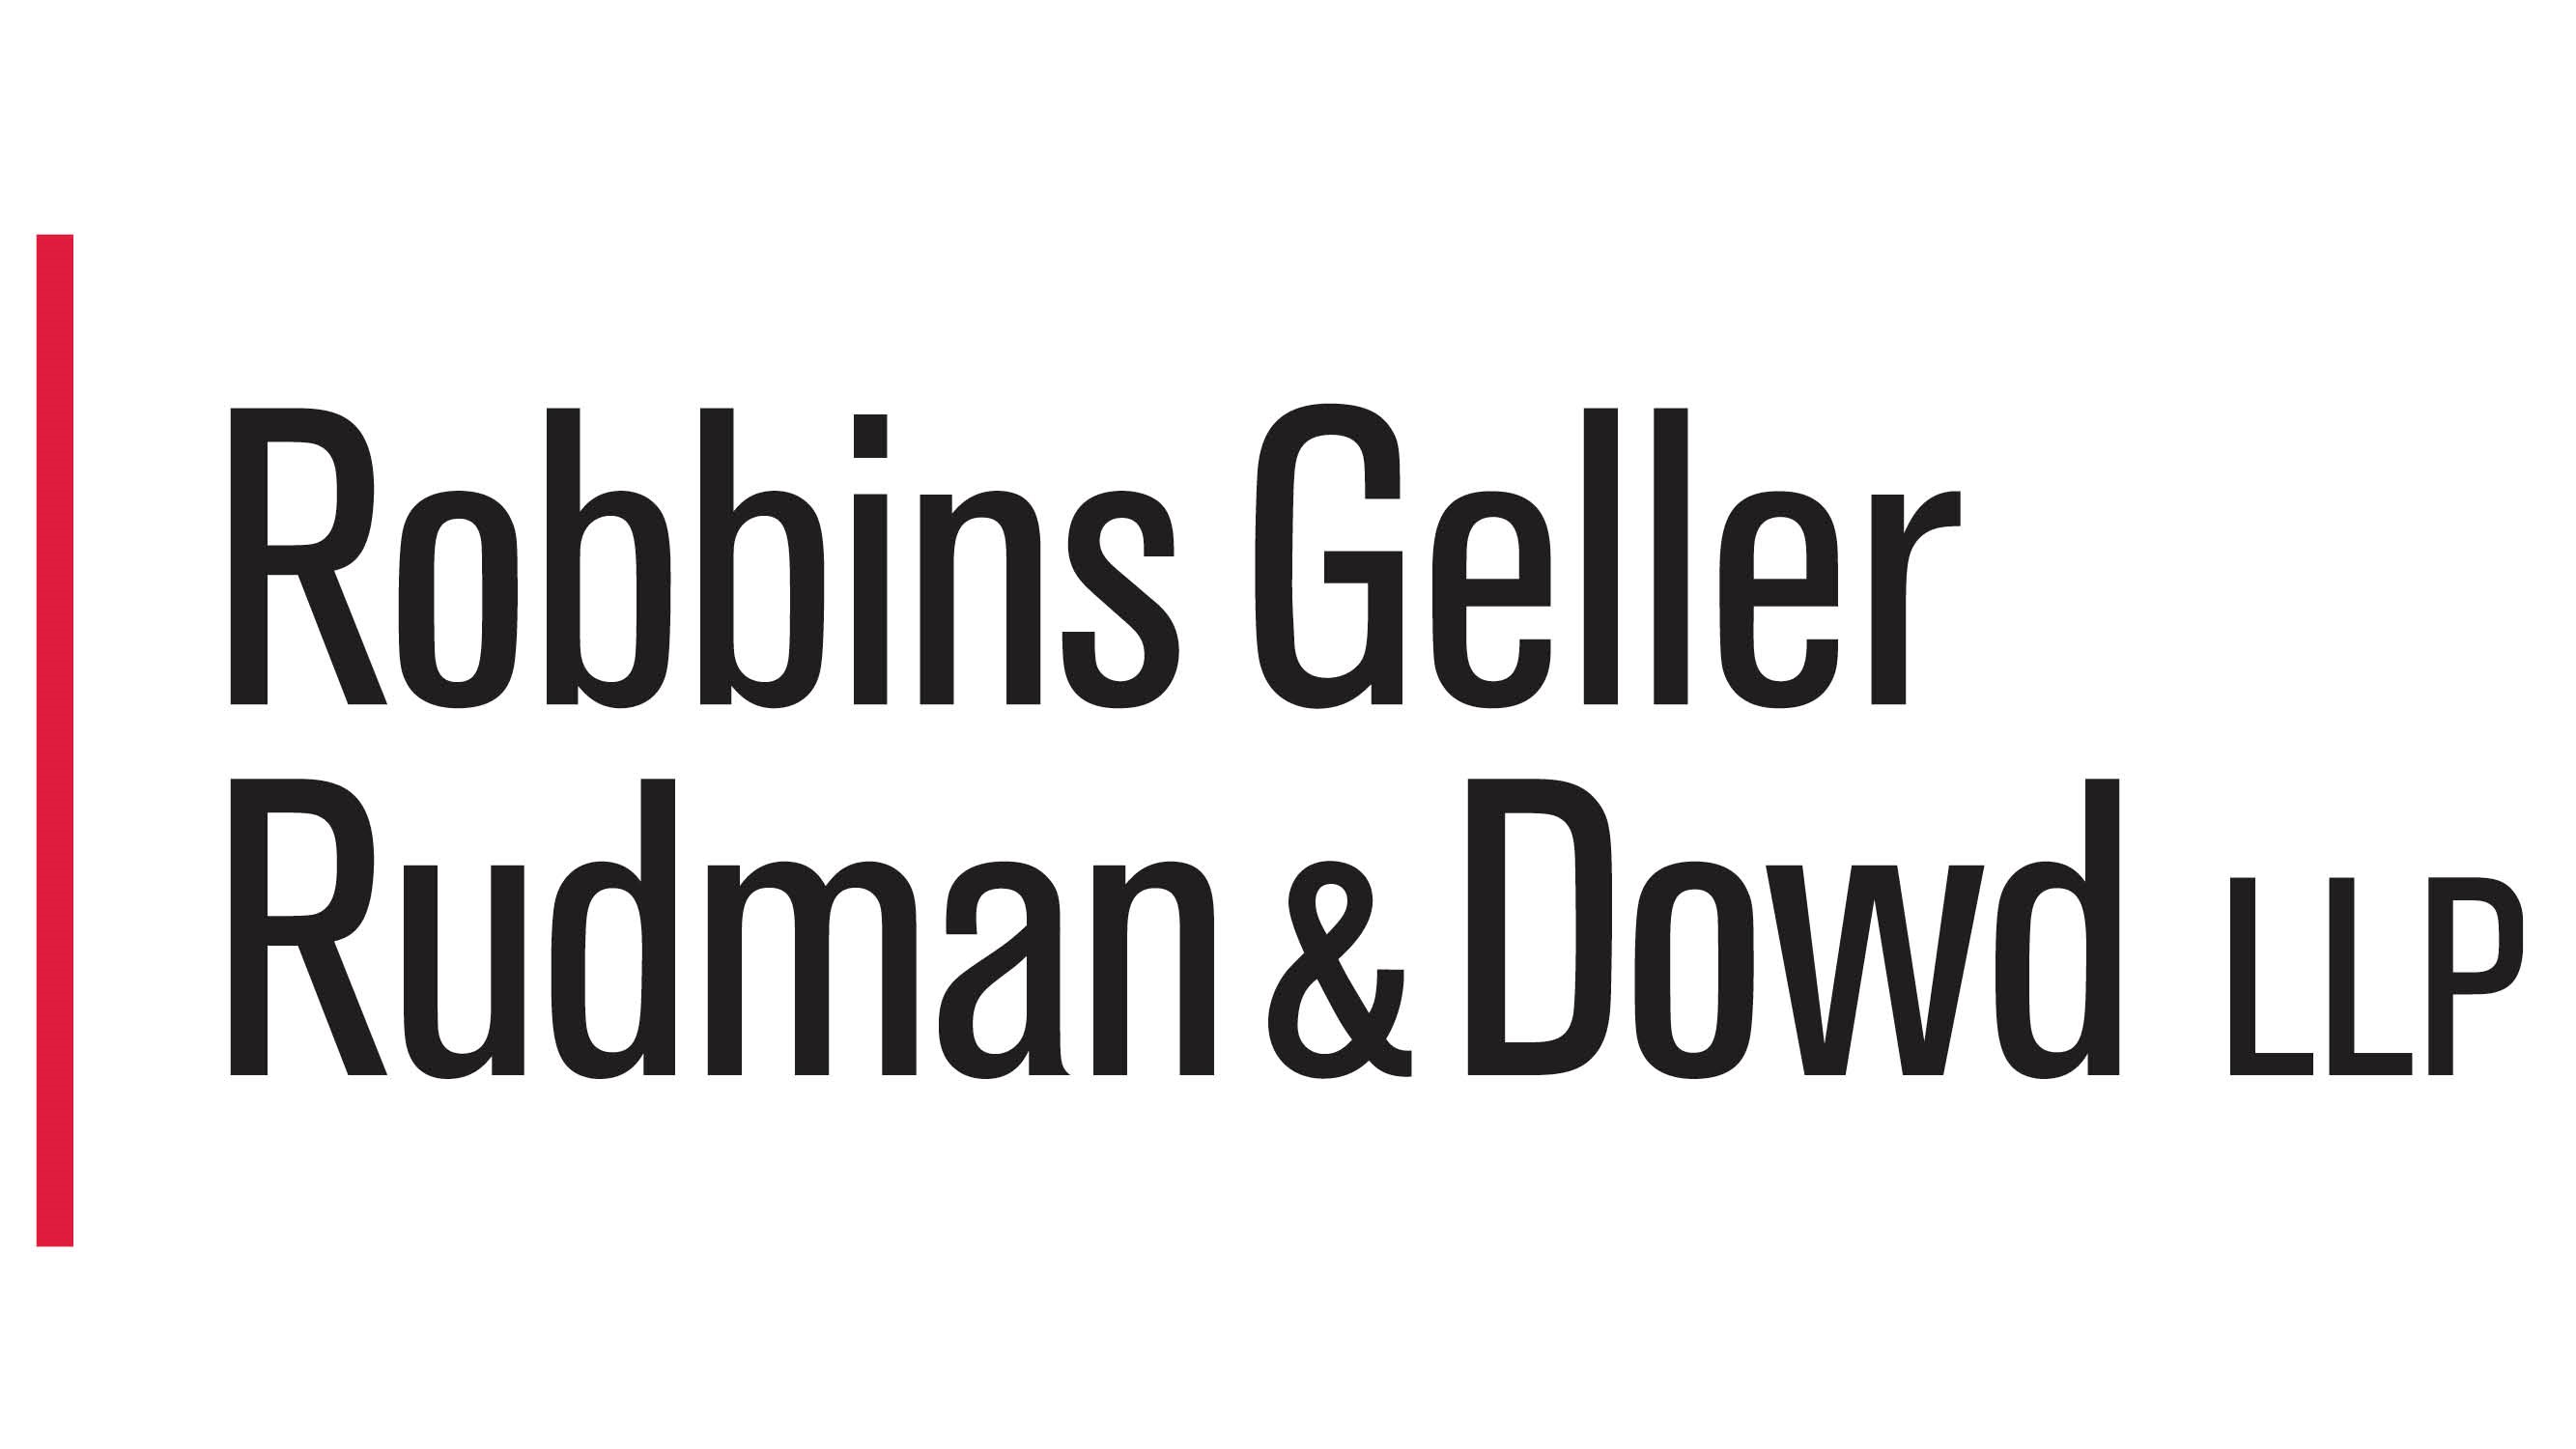 Robbins Geller Rudman & Dowd LLP, Saturday, September 11, 2021, Press release picture